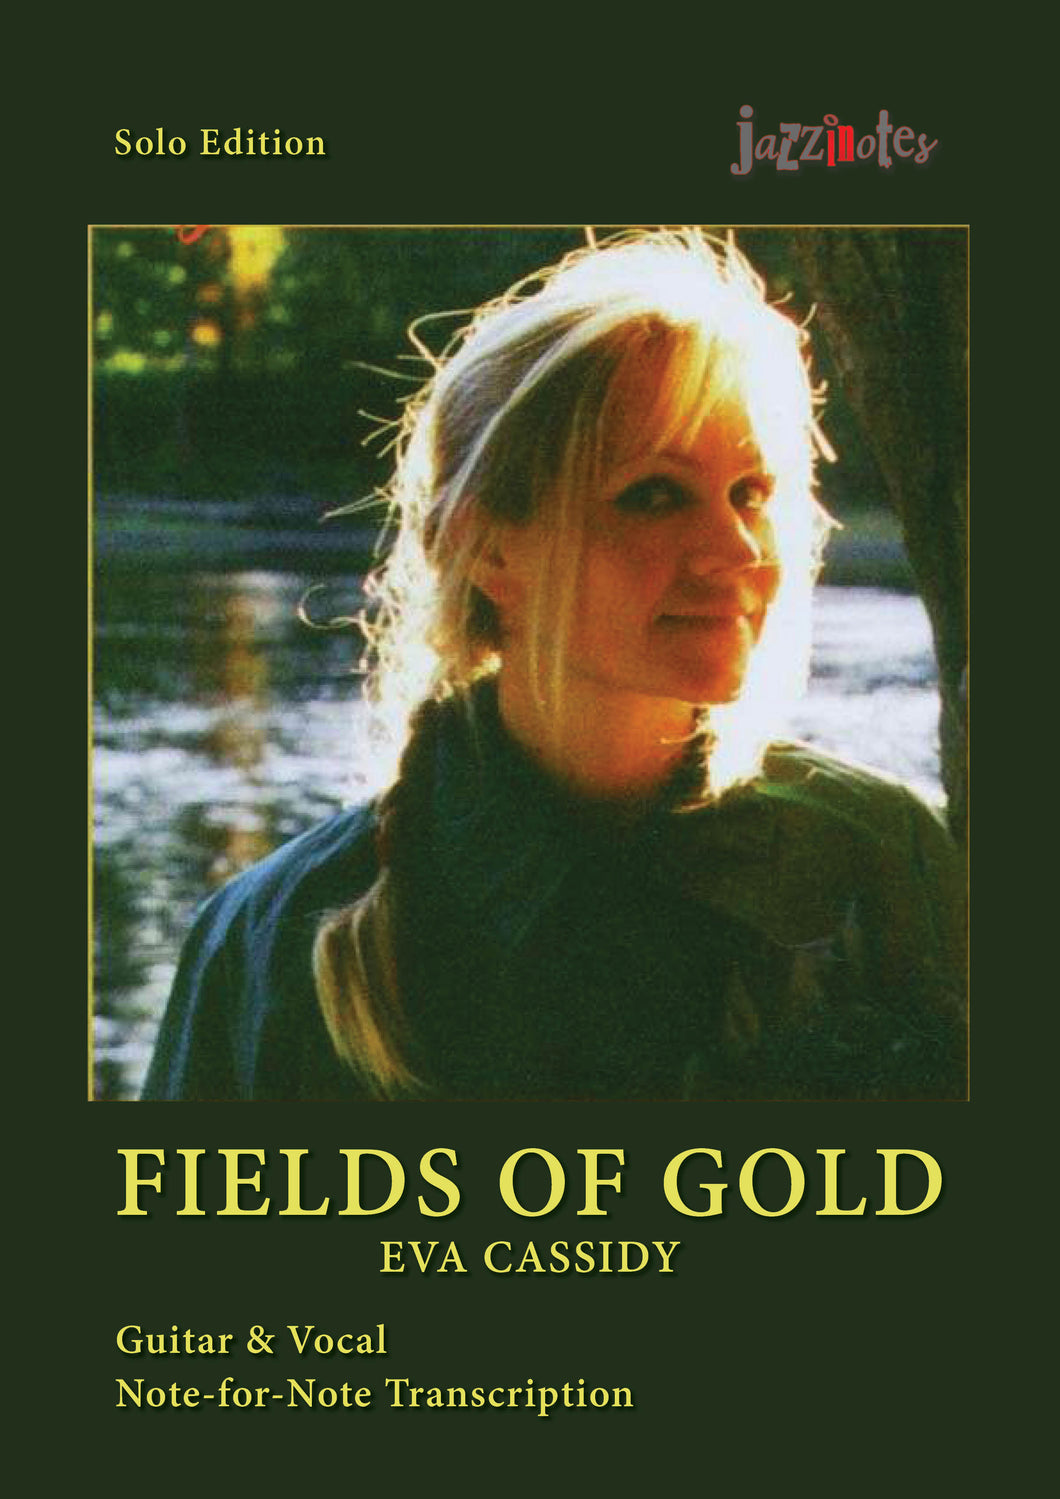 Cassidy, Eva: Fields of Gold (Guitar Version) - Sheet Music Download